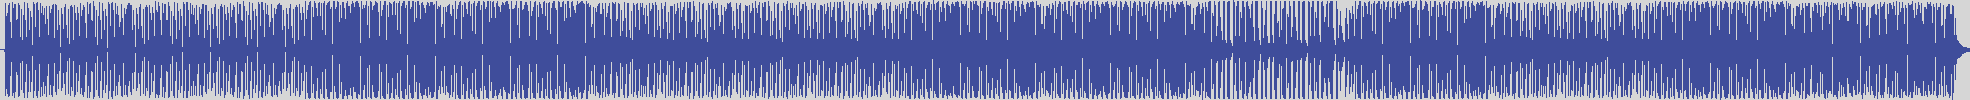 nf_boyz_records [NFY013] Esteban Morati Dj - Natron Lake [Original Mix] audio wave form